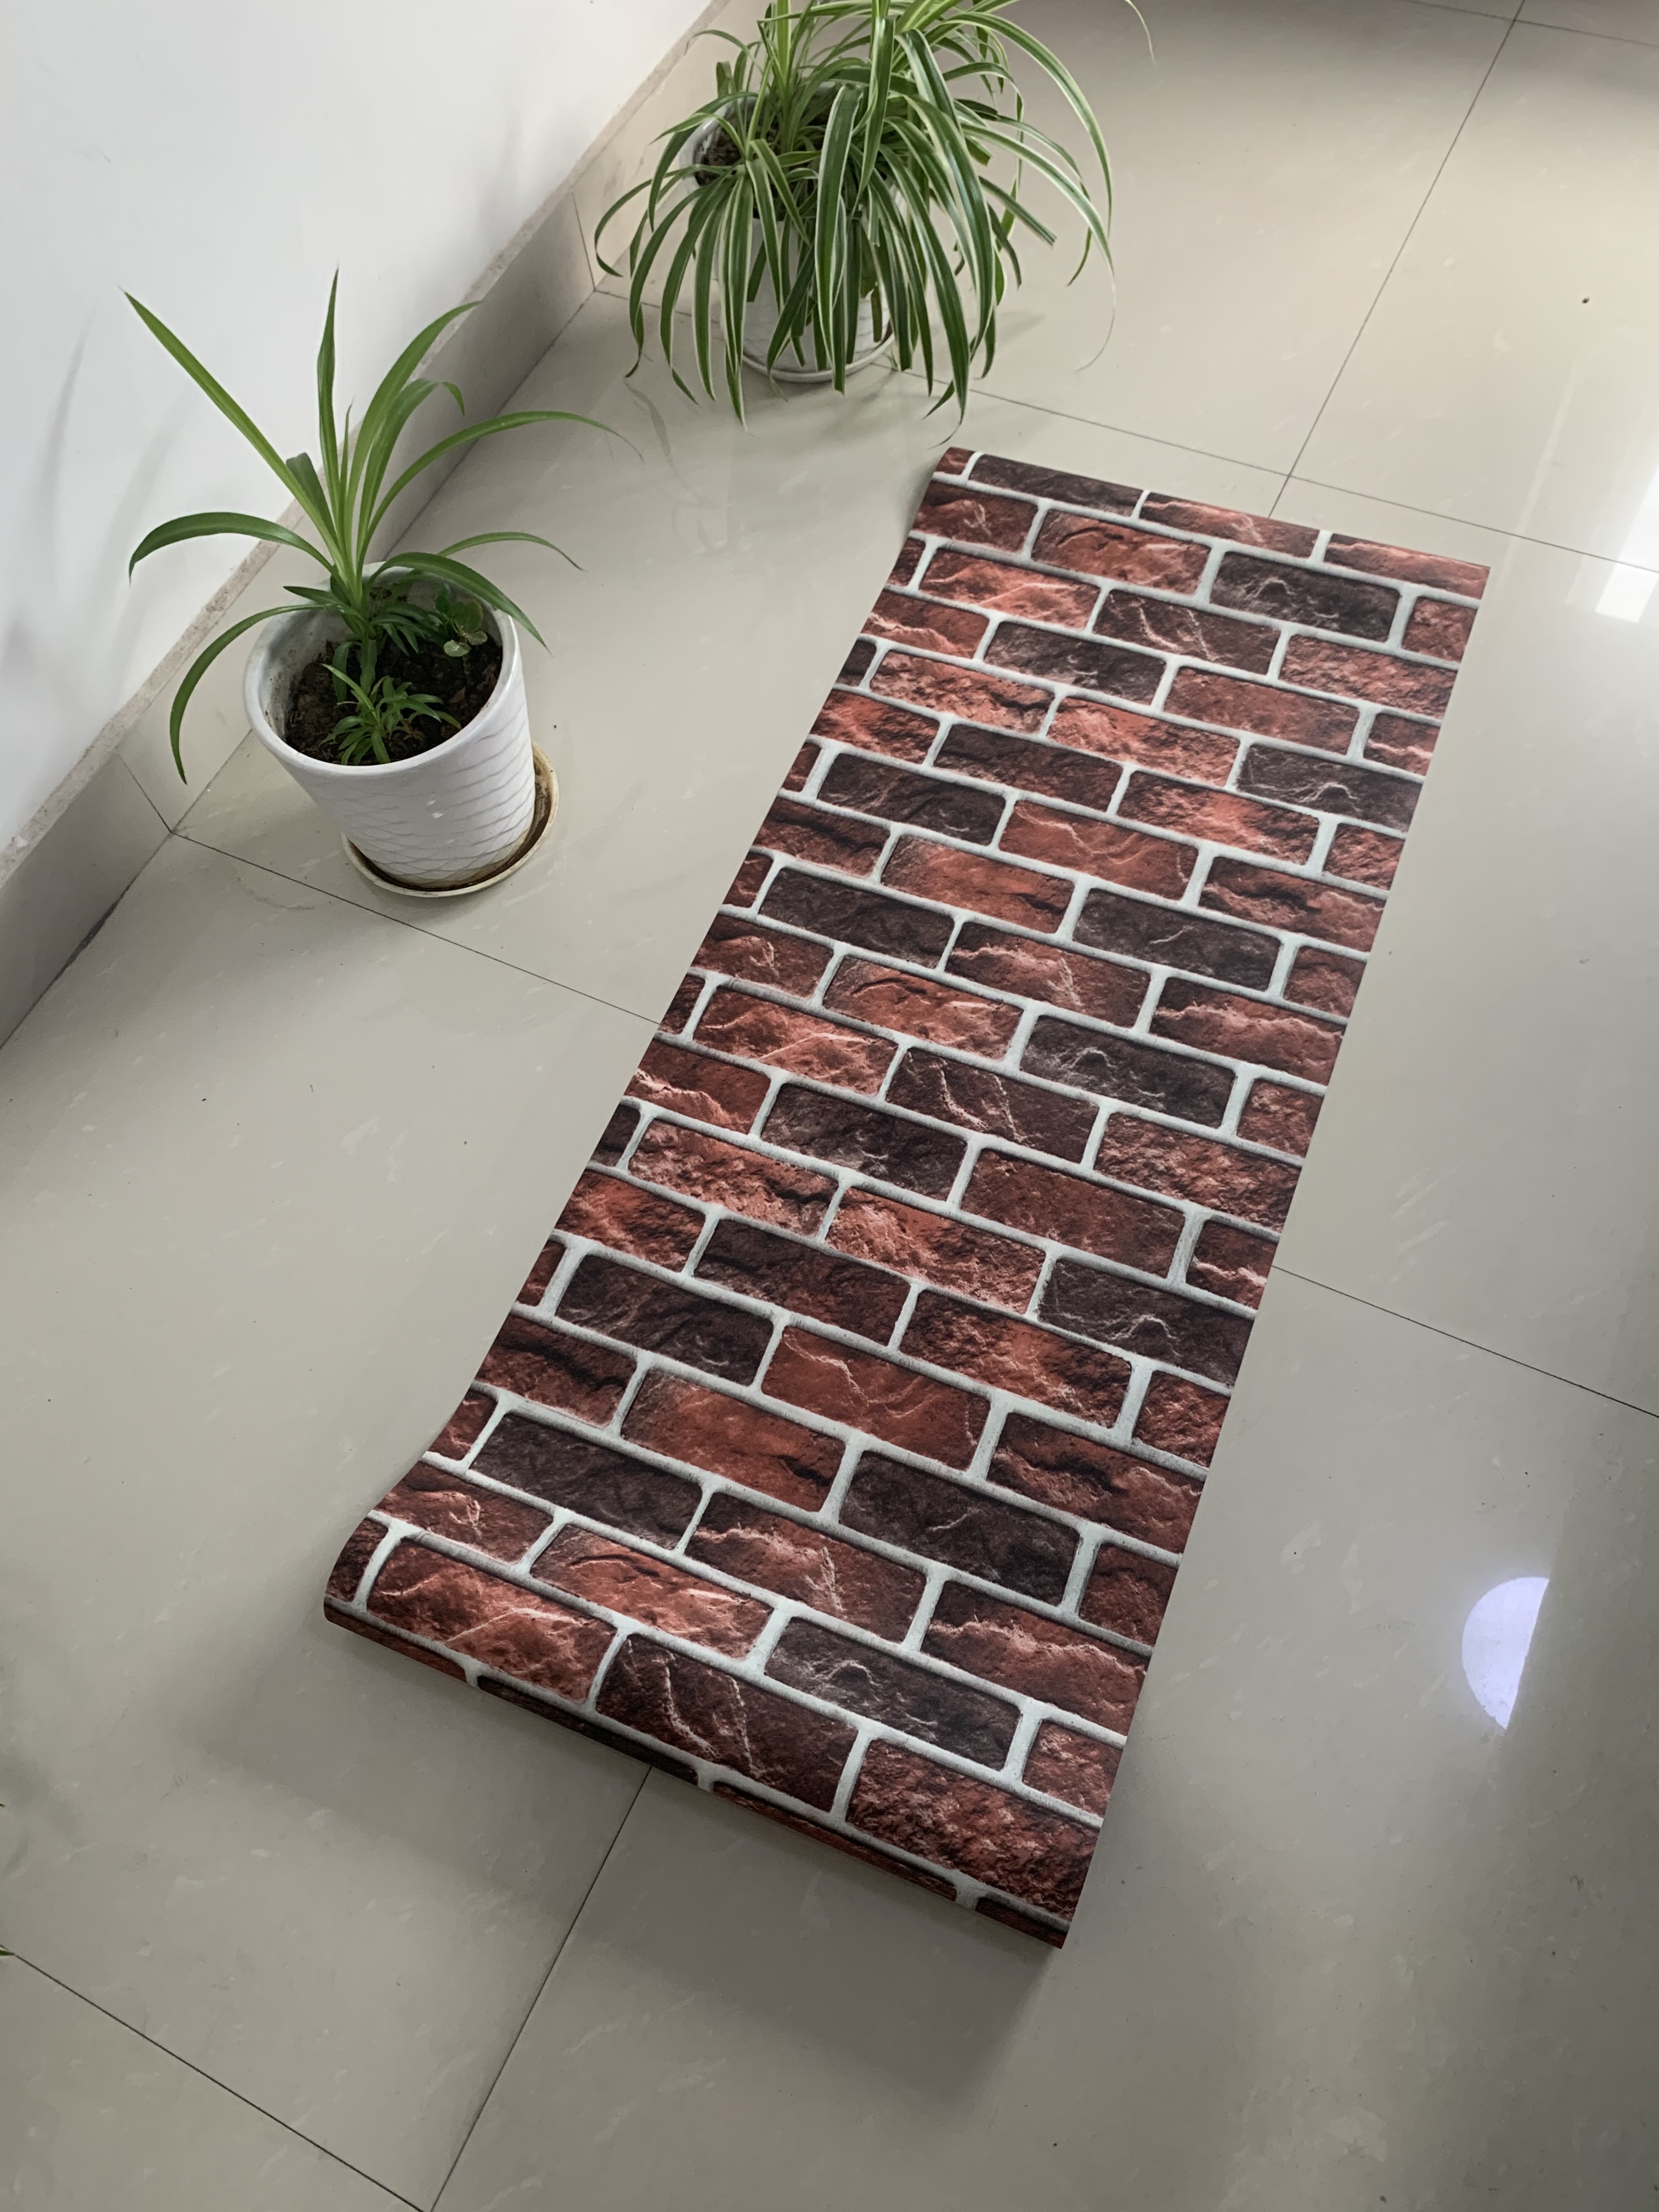 Brick designs wallpaper Popular in African market, 3d wall paper pvc decorative roll wall paper stone